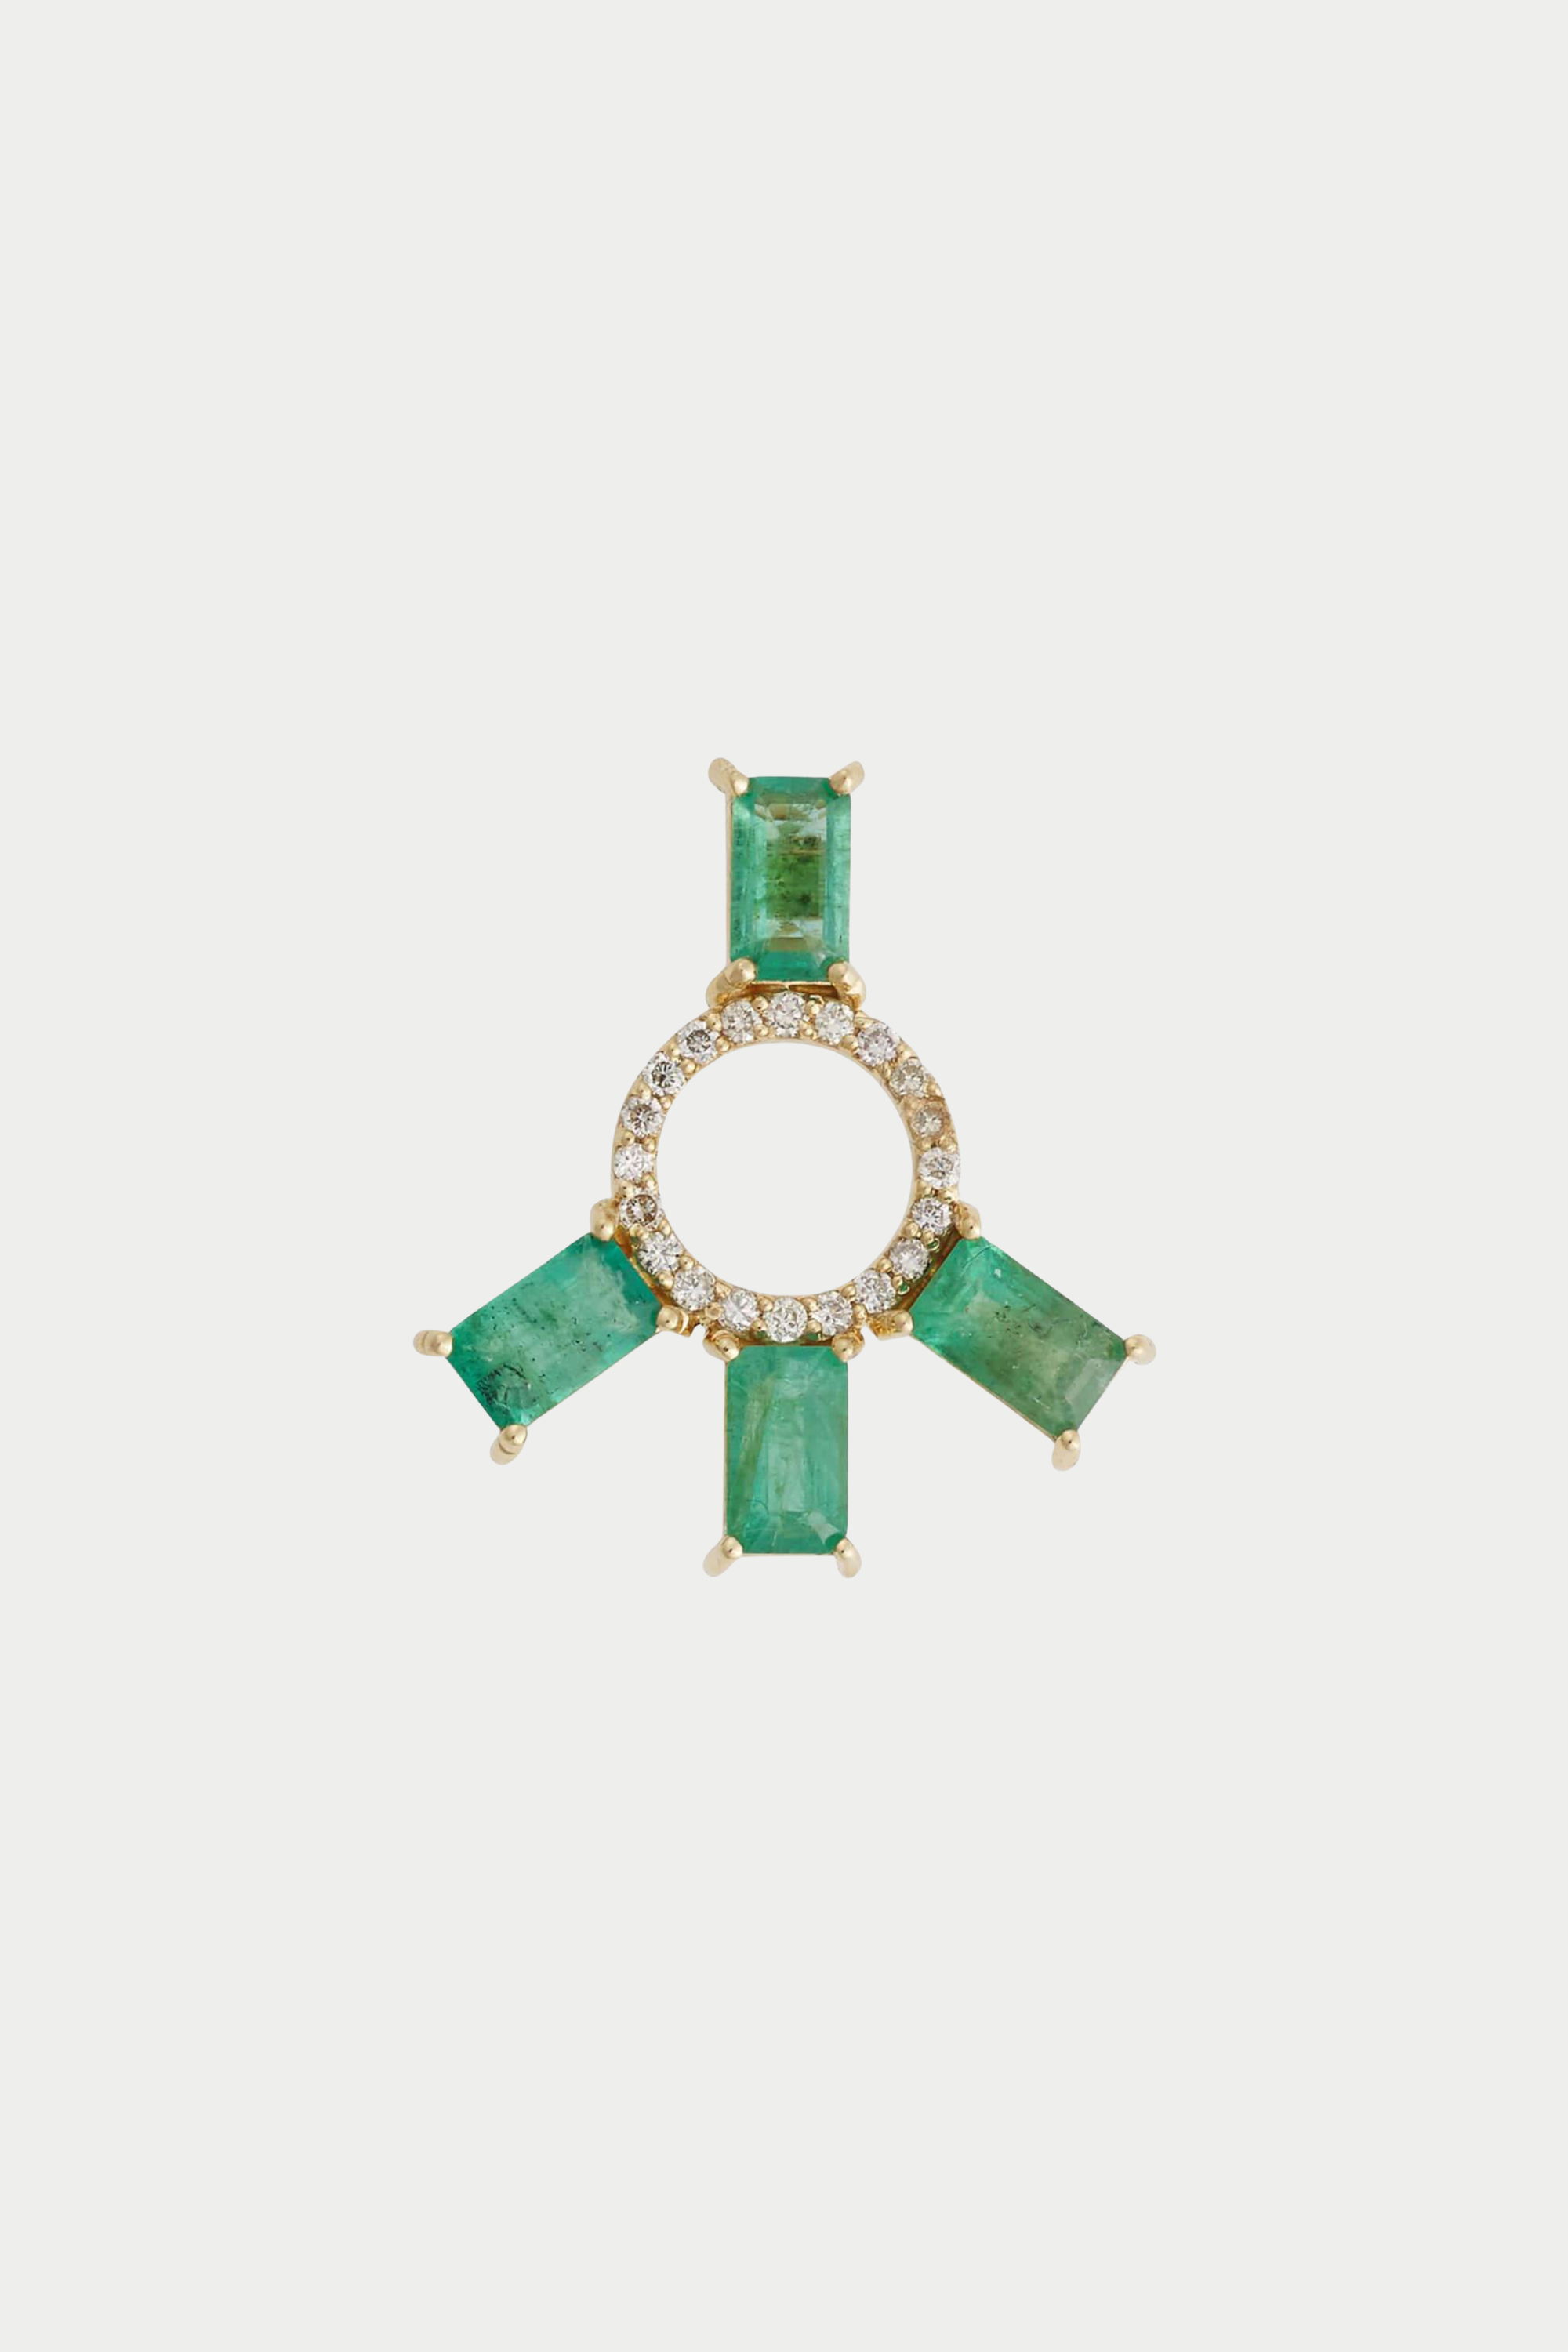 ILEANA MAKRI - Peace Earring, Emerald